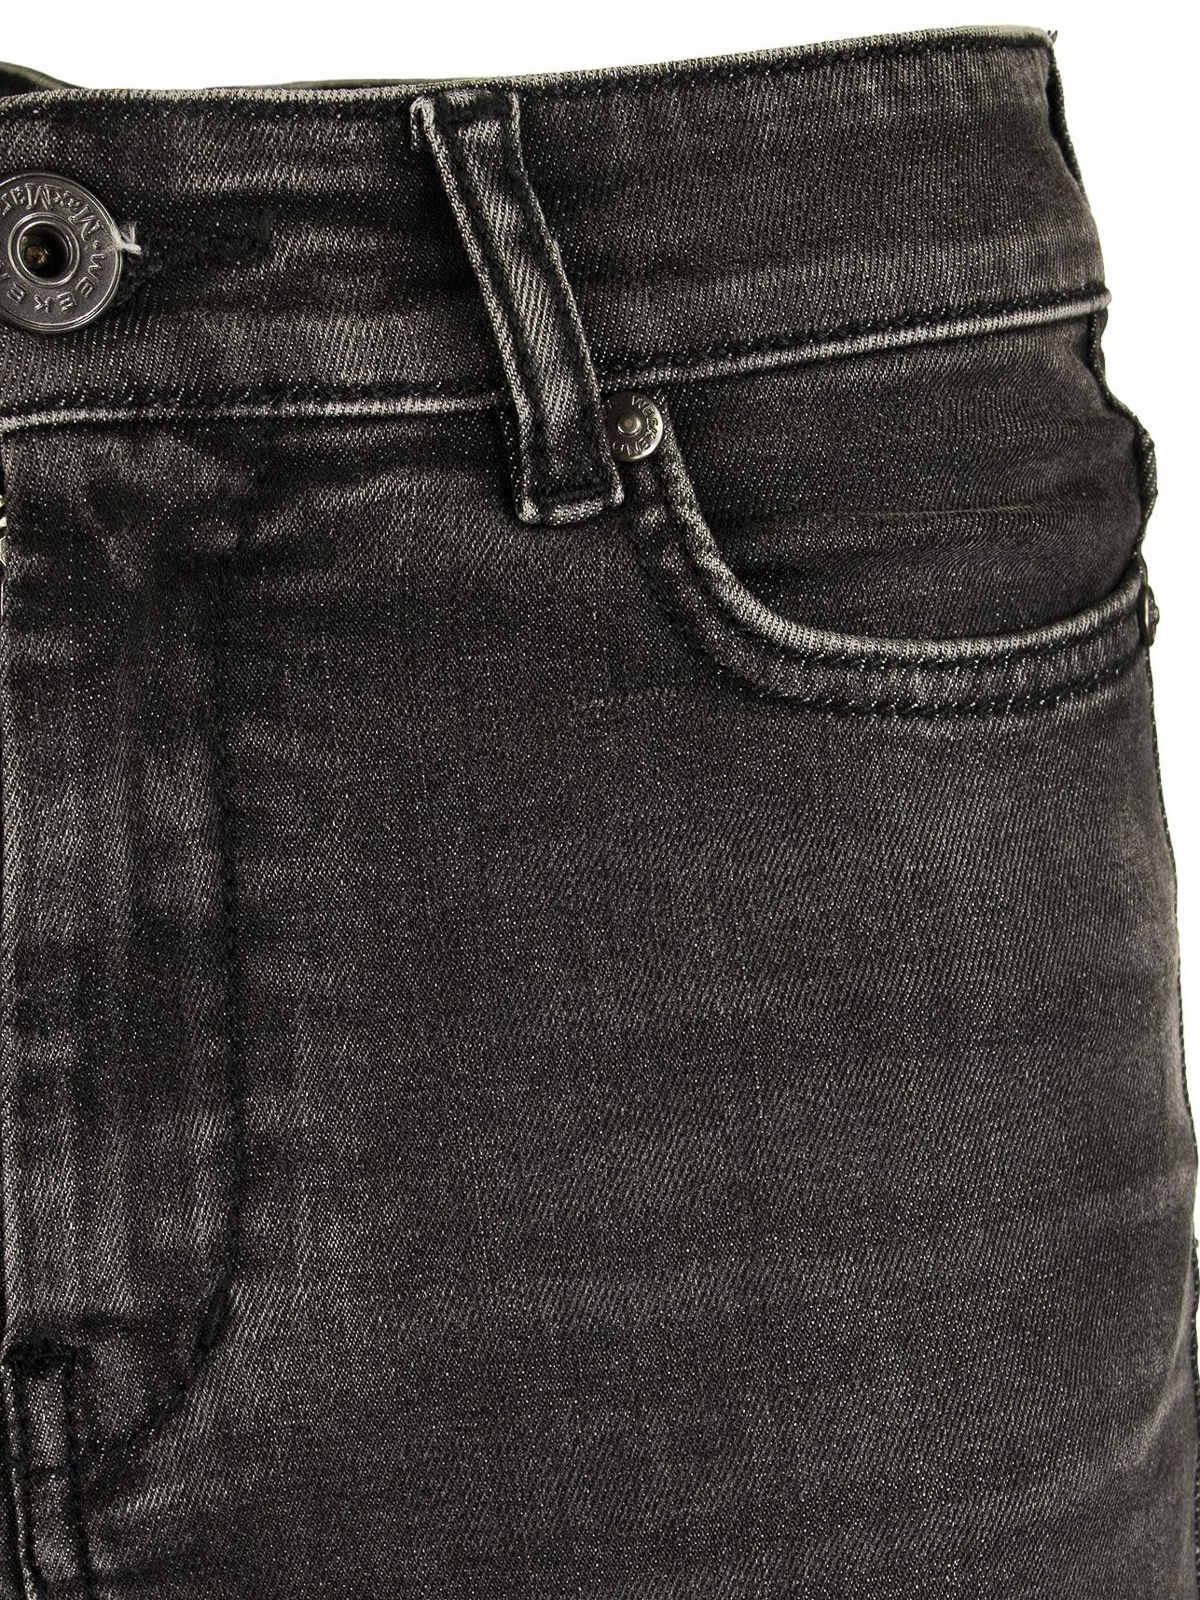 Skinny jeans Weekend Max Mara - Patto skinny jeans -